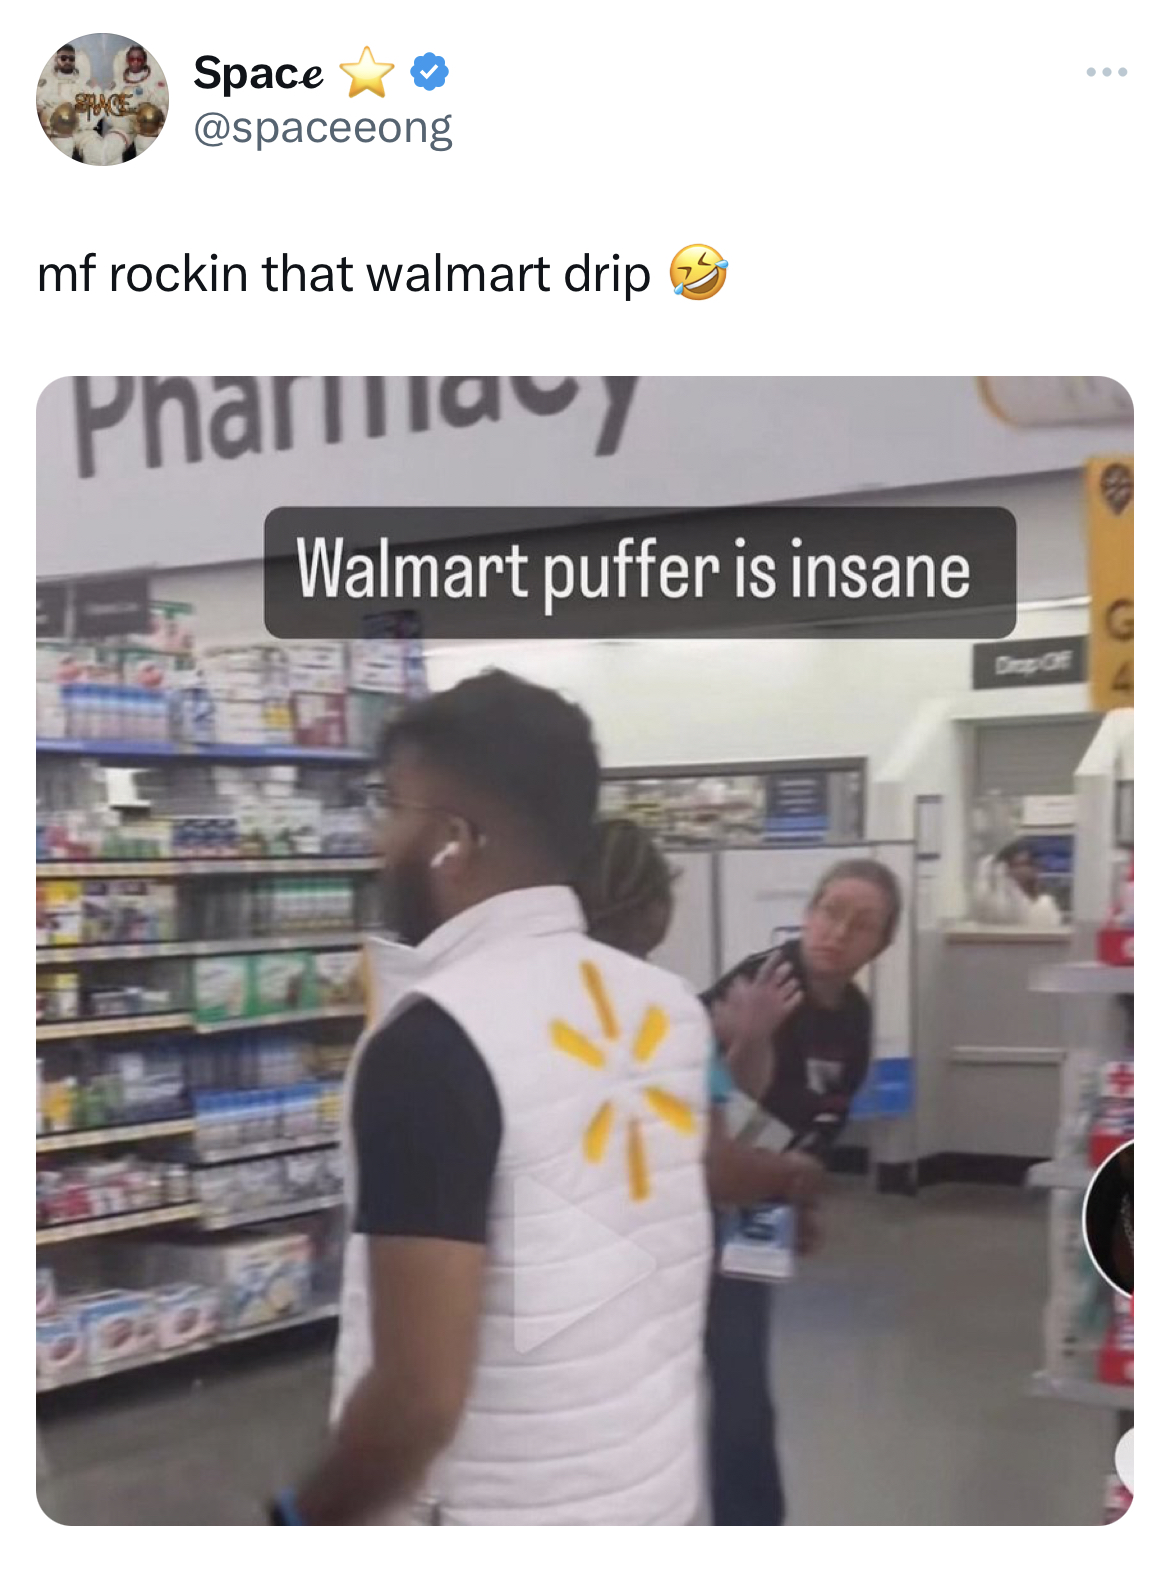 savage and funny tweets -customer - Space mf rockin that walmart drip Pharmacy Walmart puffer is insane De C